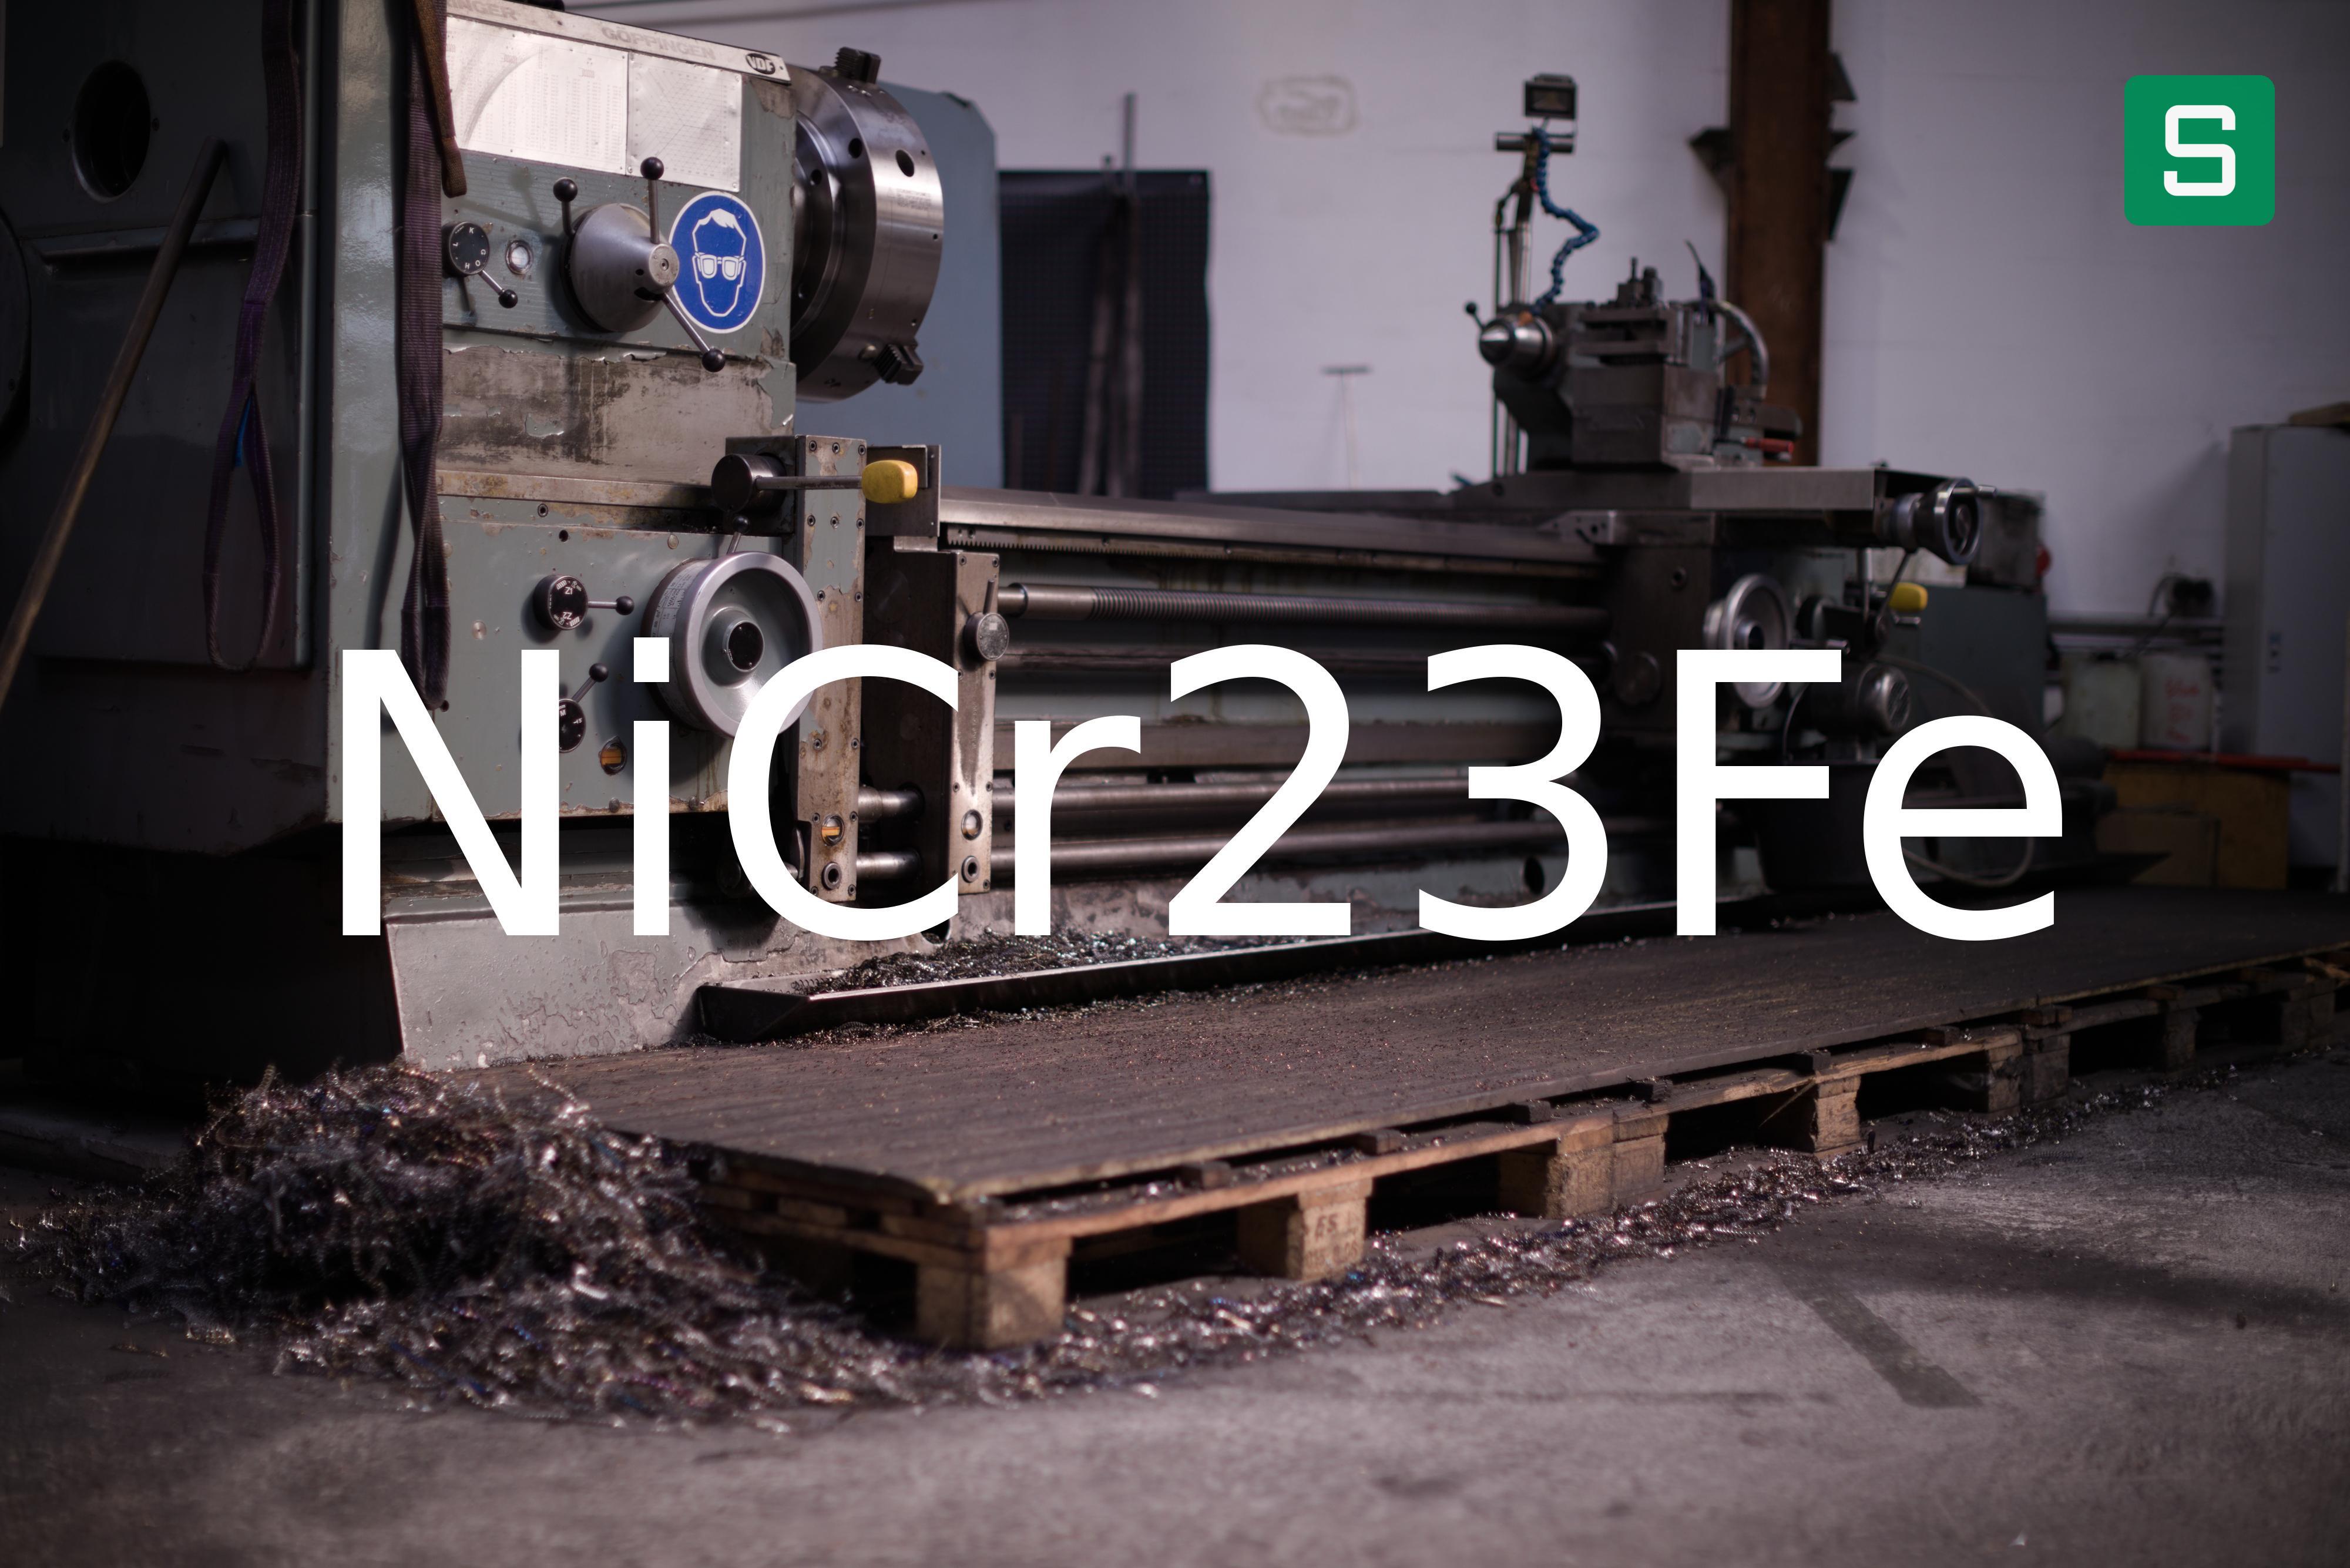 Steel Material: NiCr23Fe